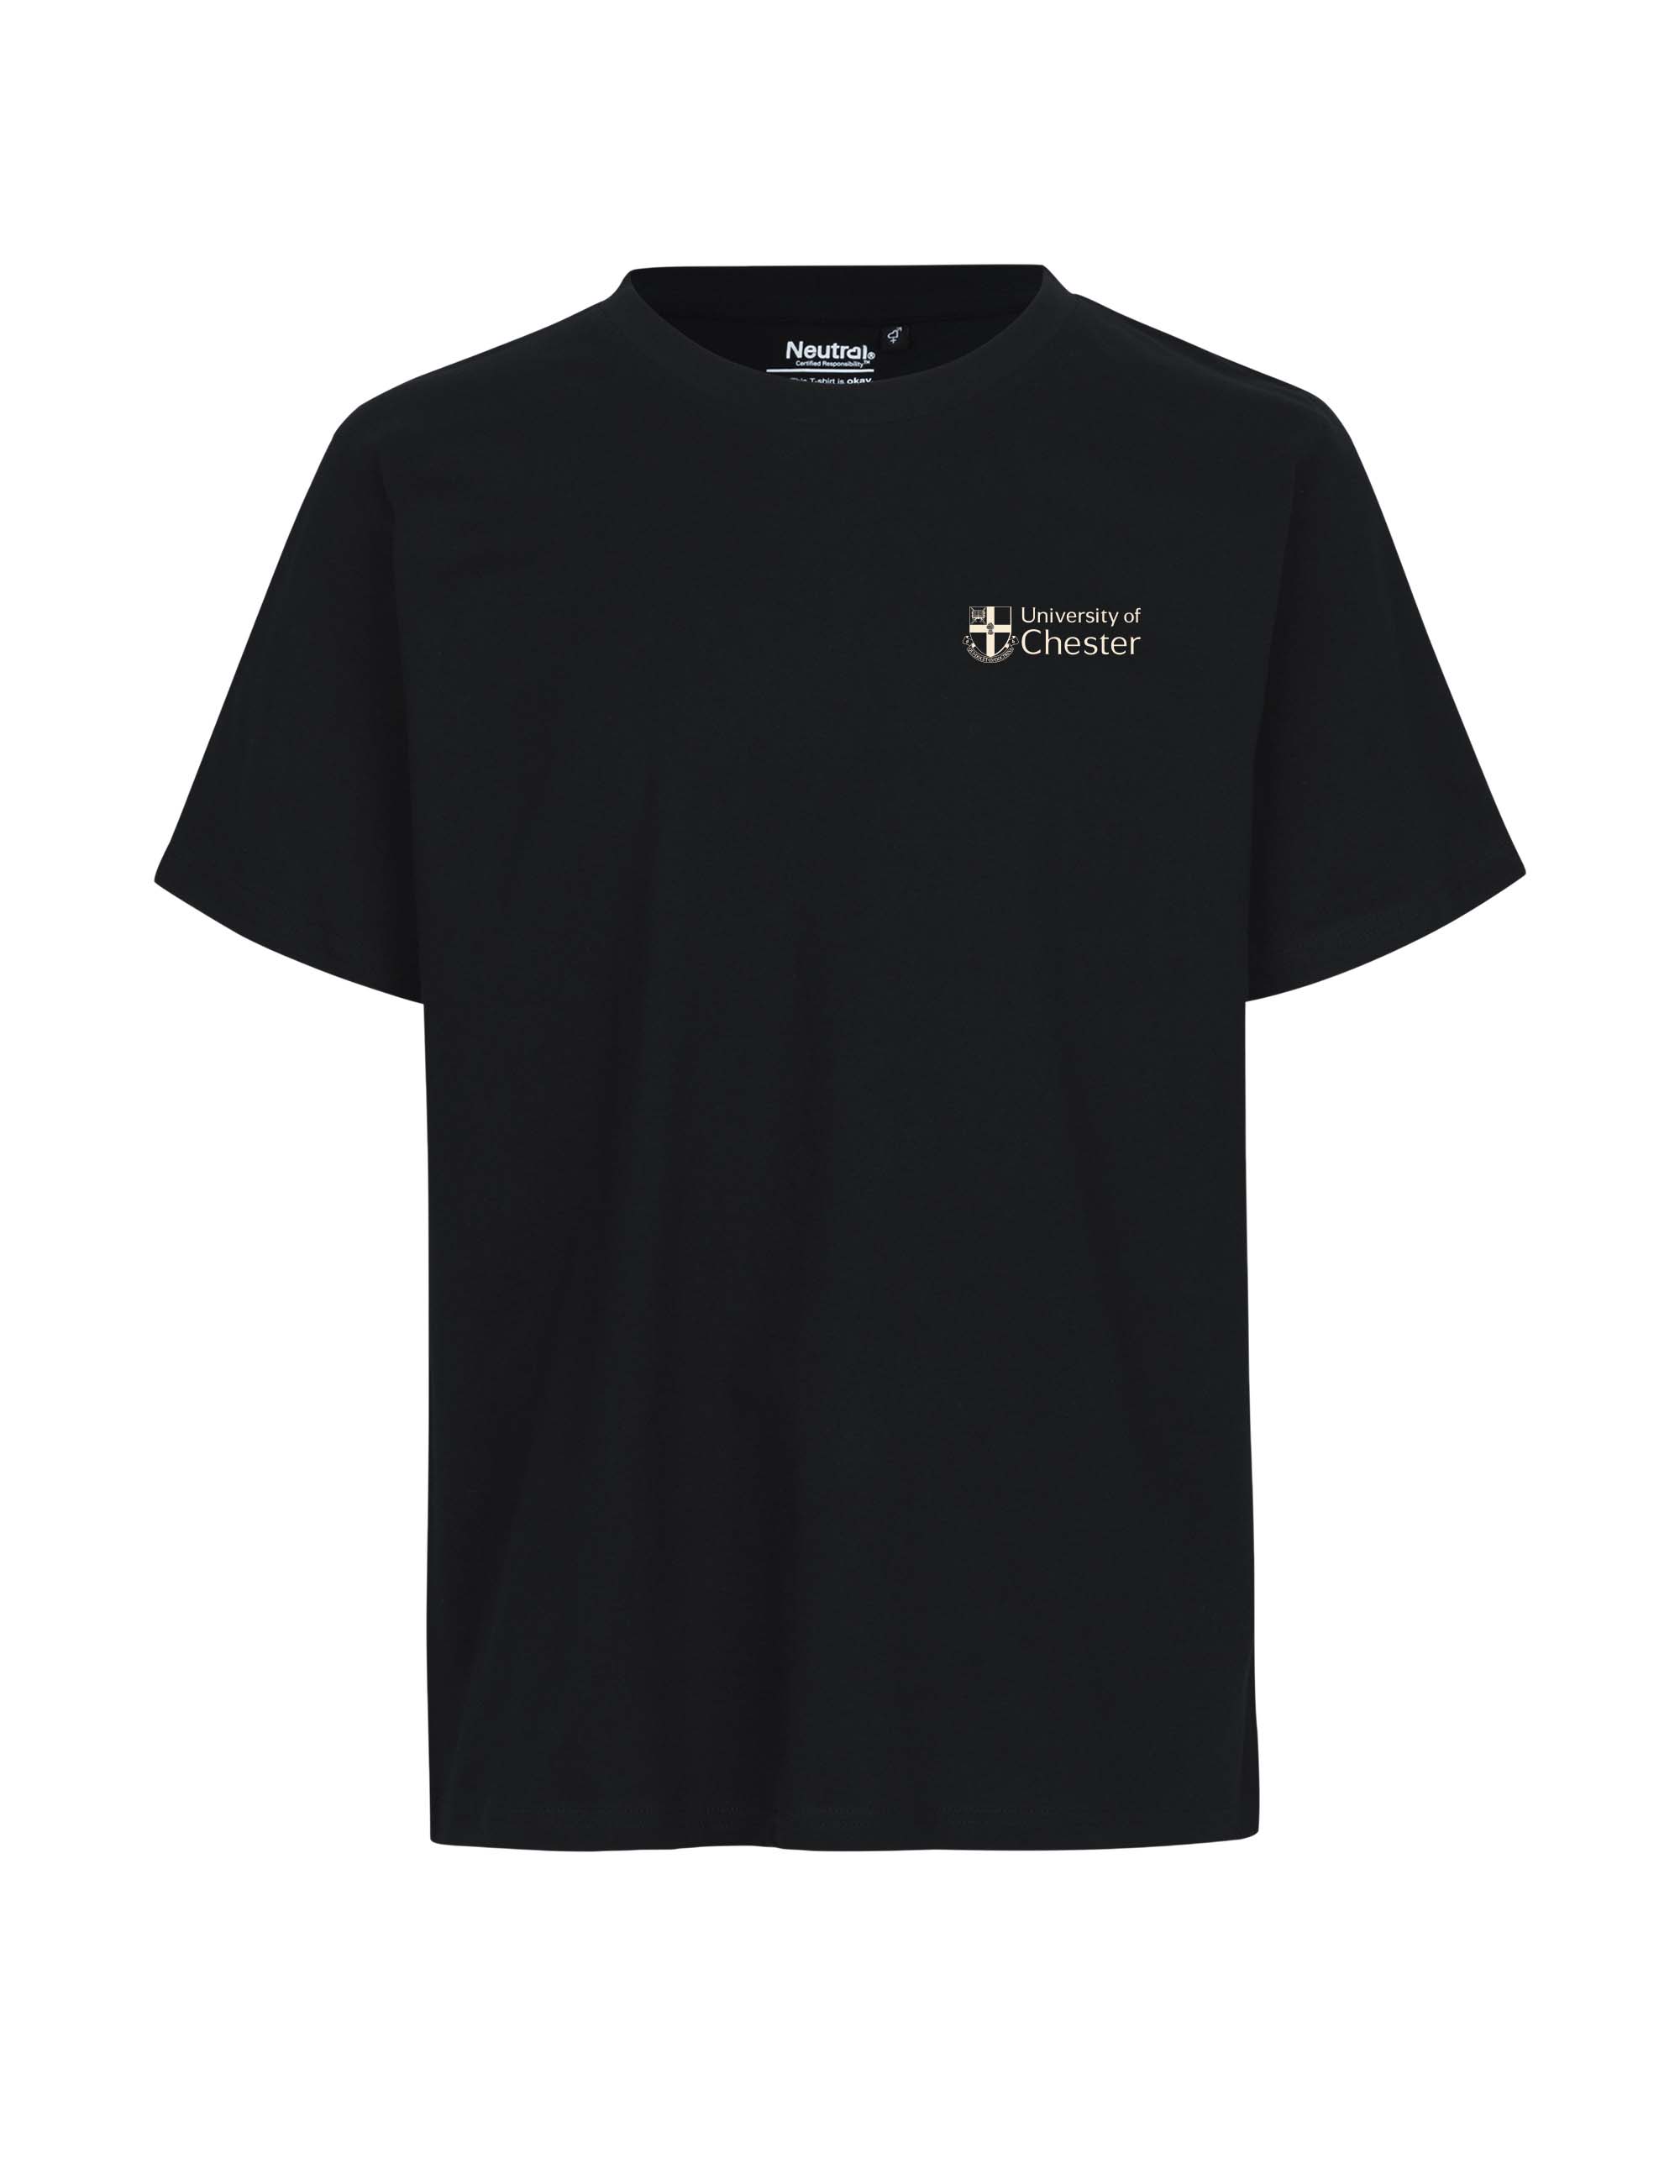 Neutral range - UoC T-Shirt - Black - XL